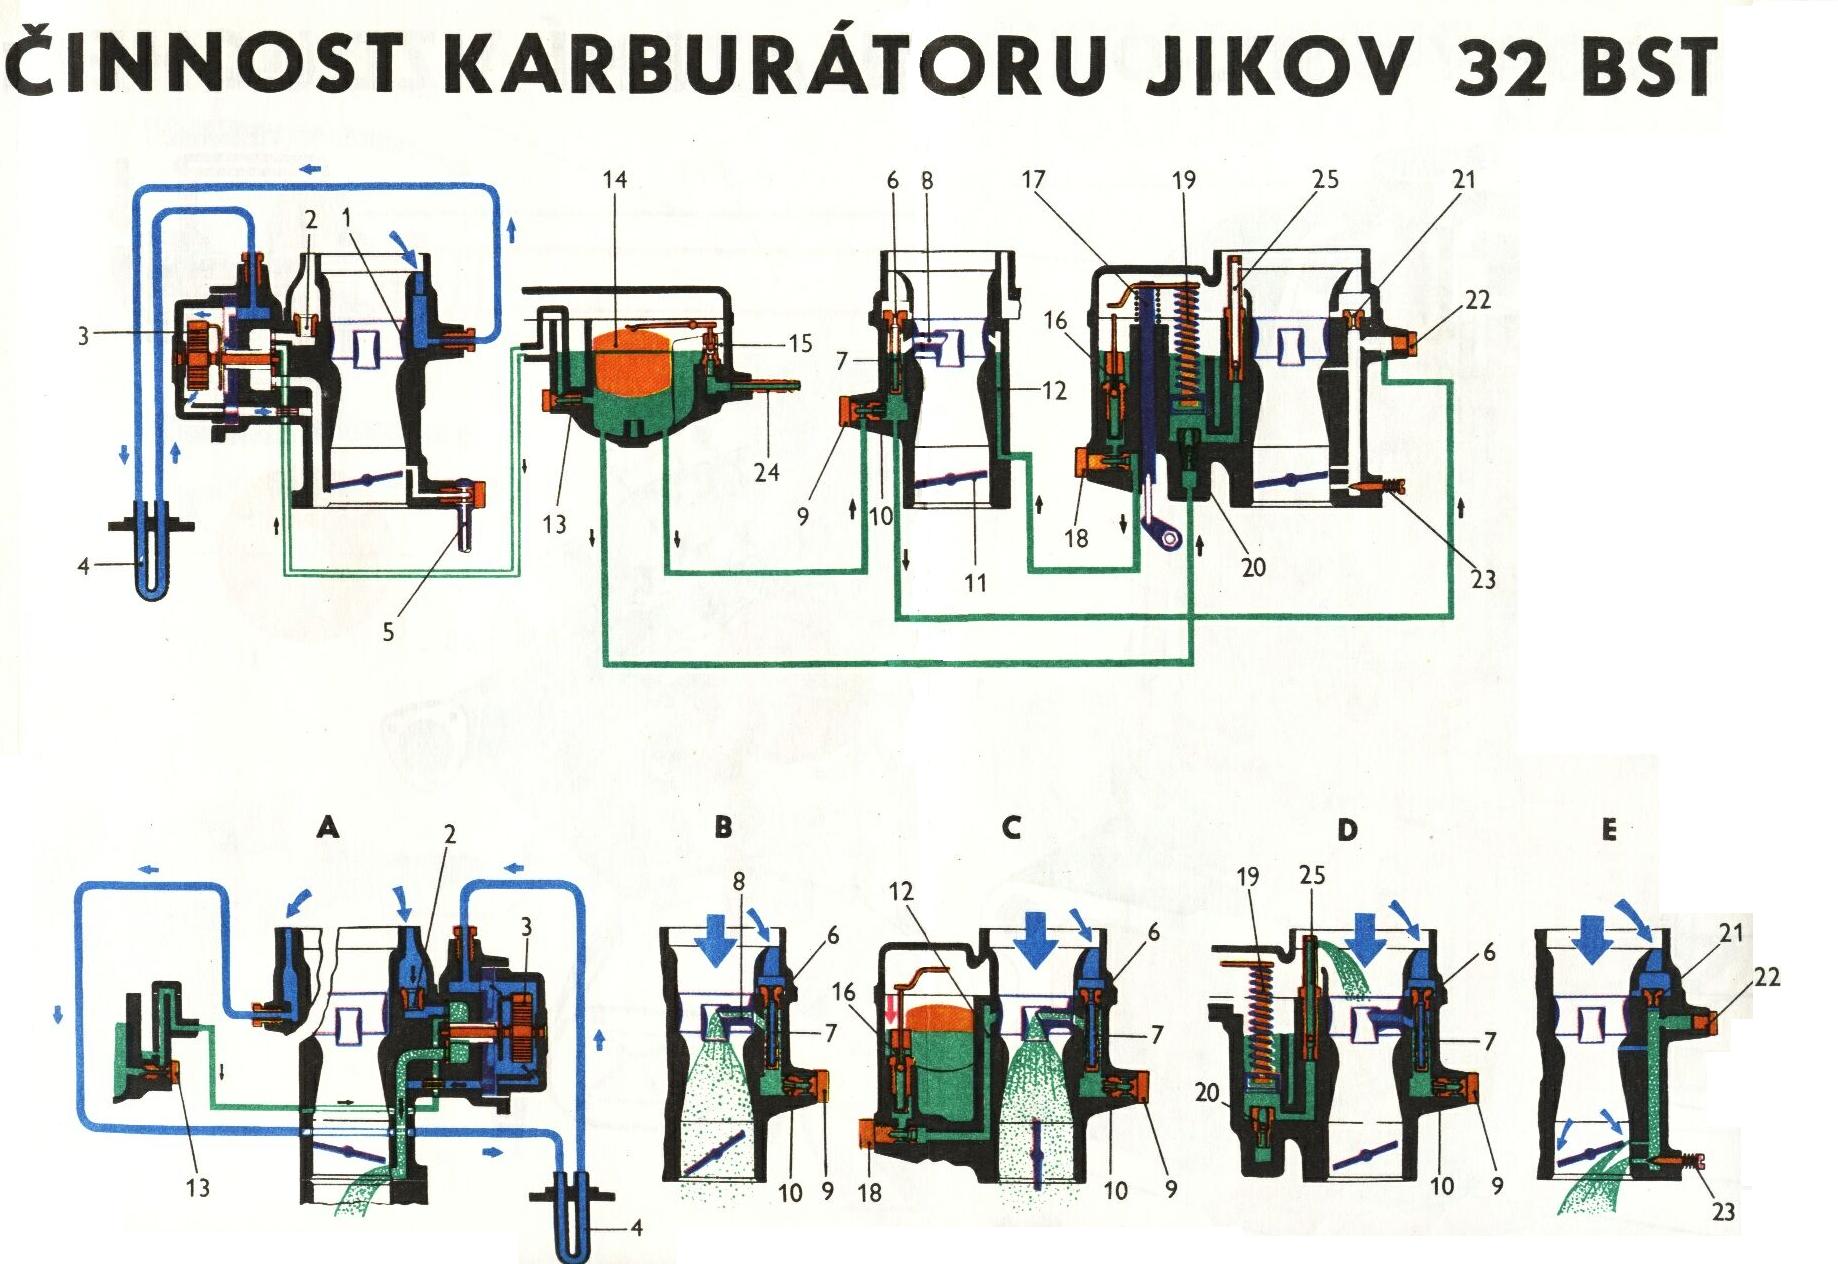 Činnost karburátoru Jikov 32 BST 